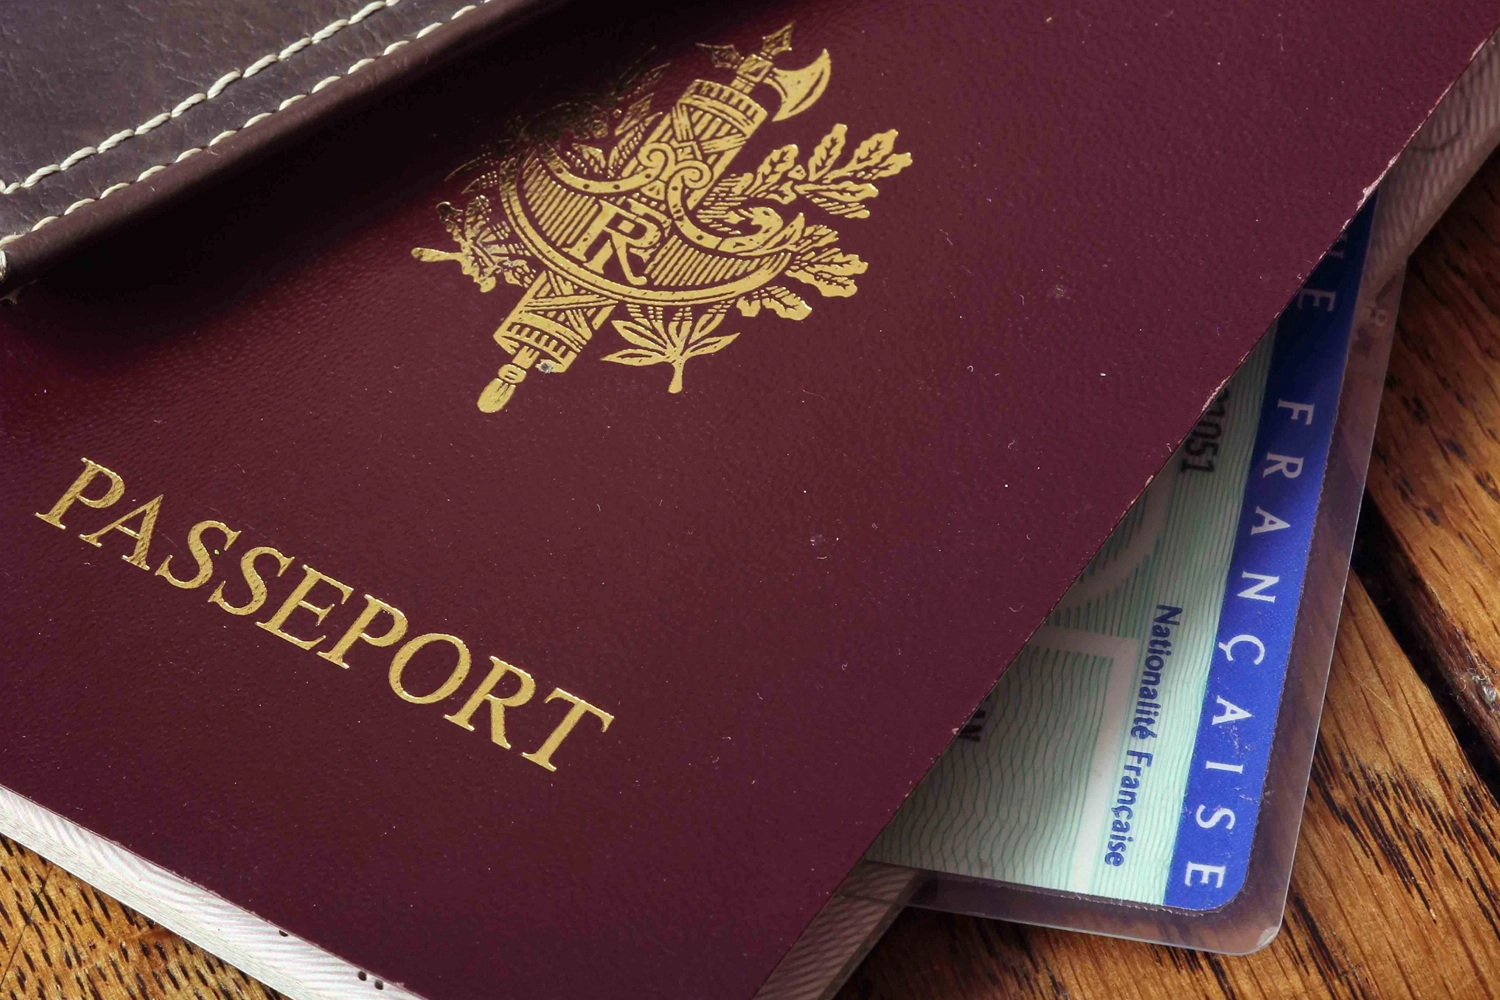 carte identite passeport